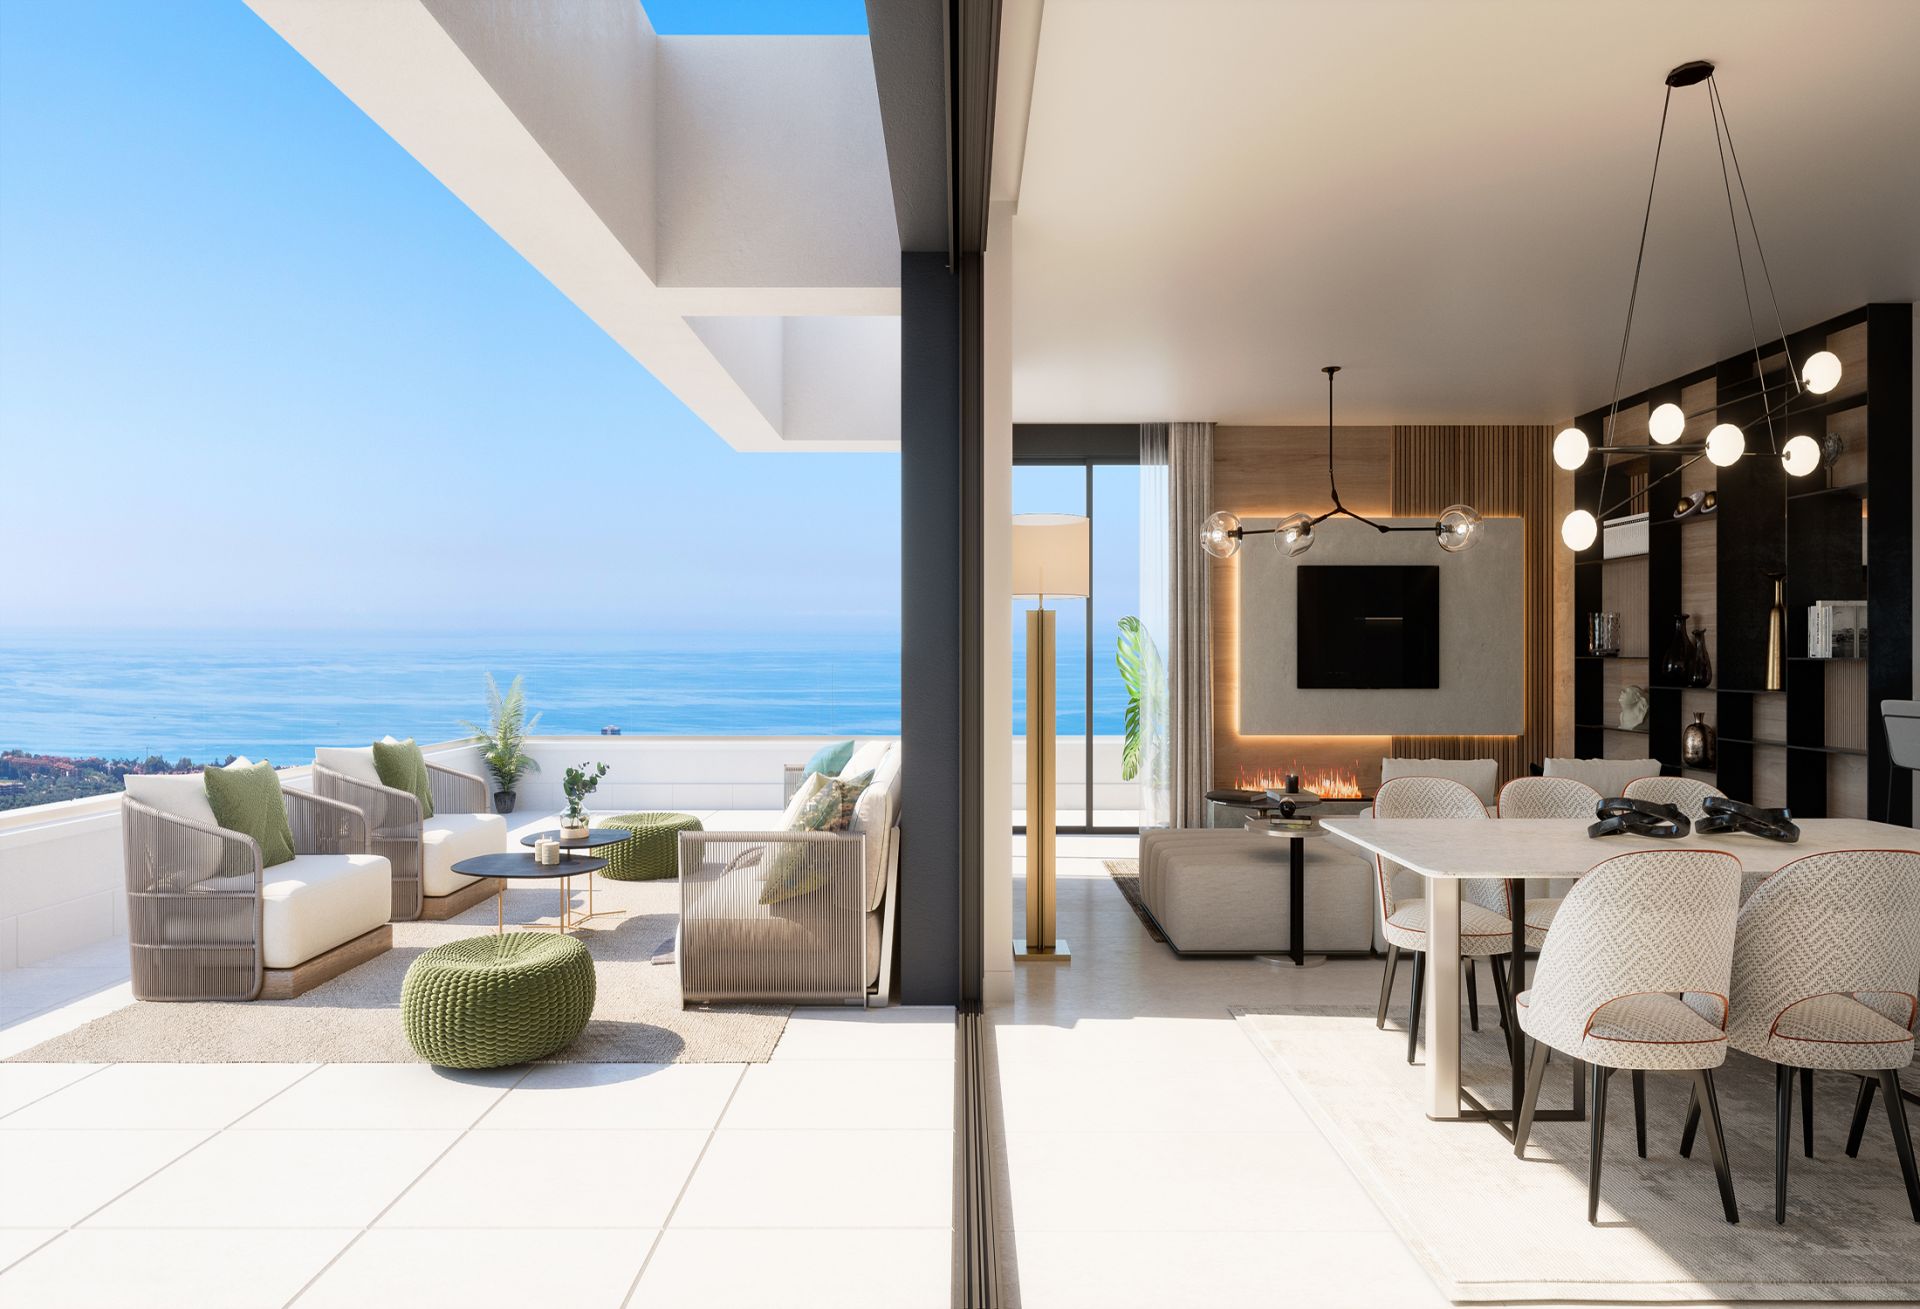 Luxury penthouse with panoramic views | Engel & Völkers Marbella